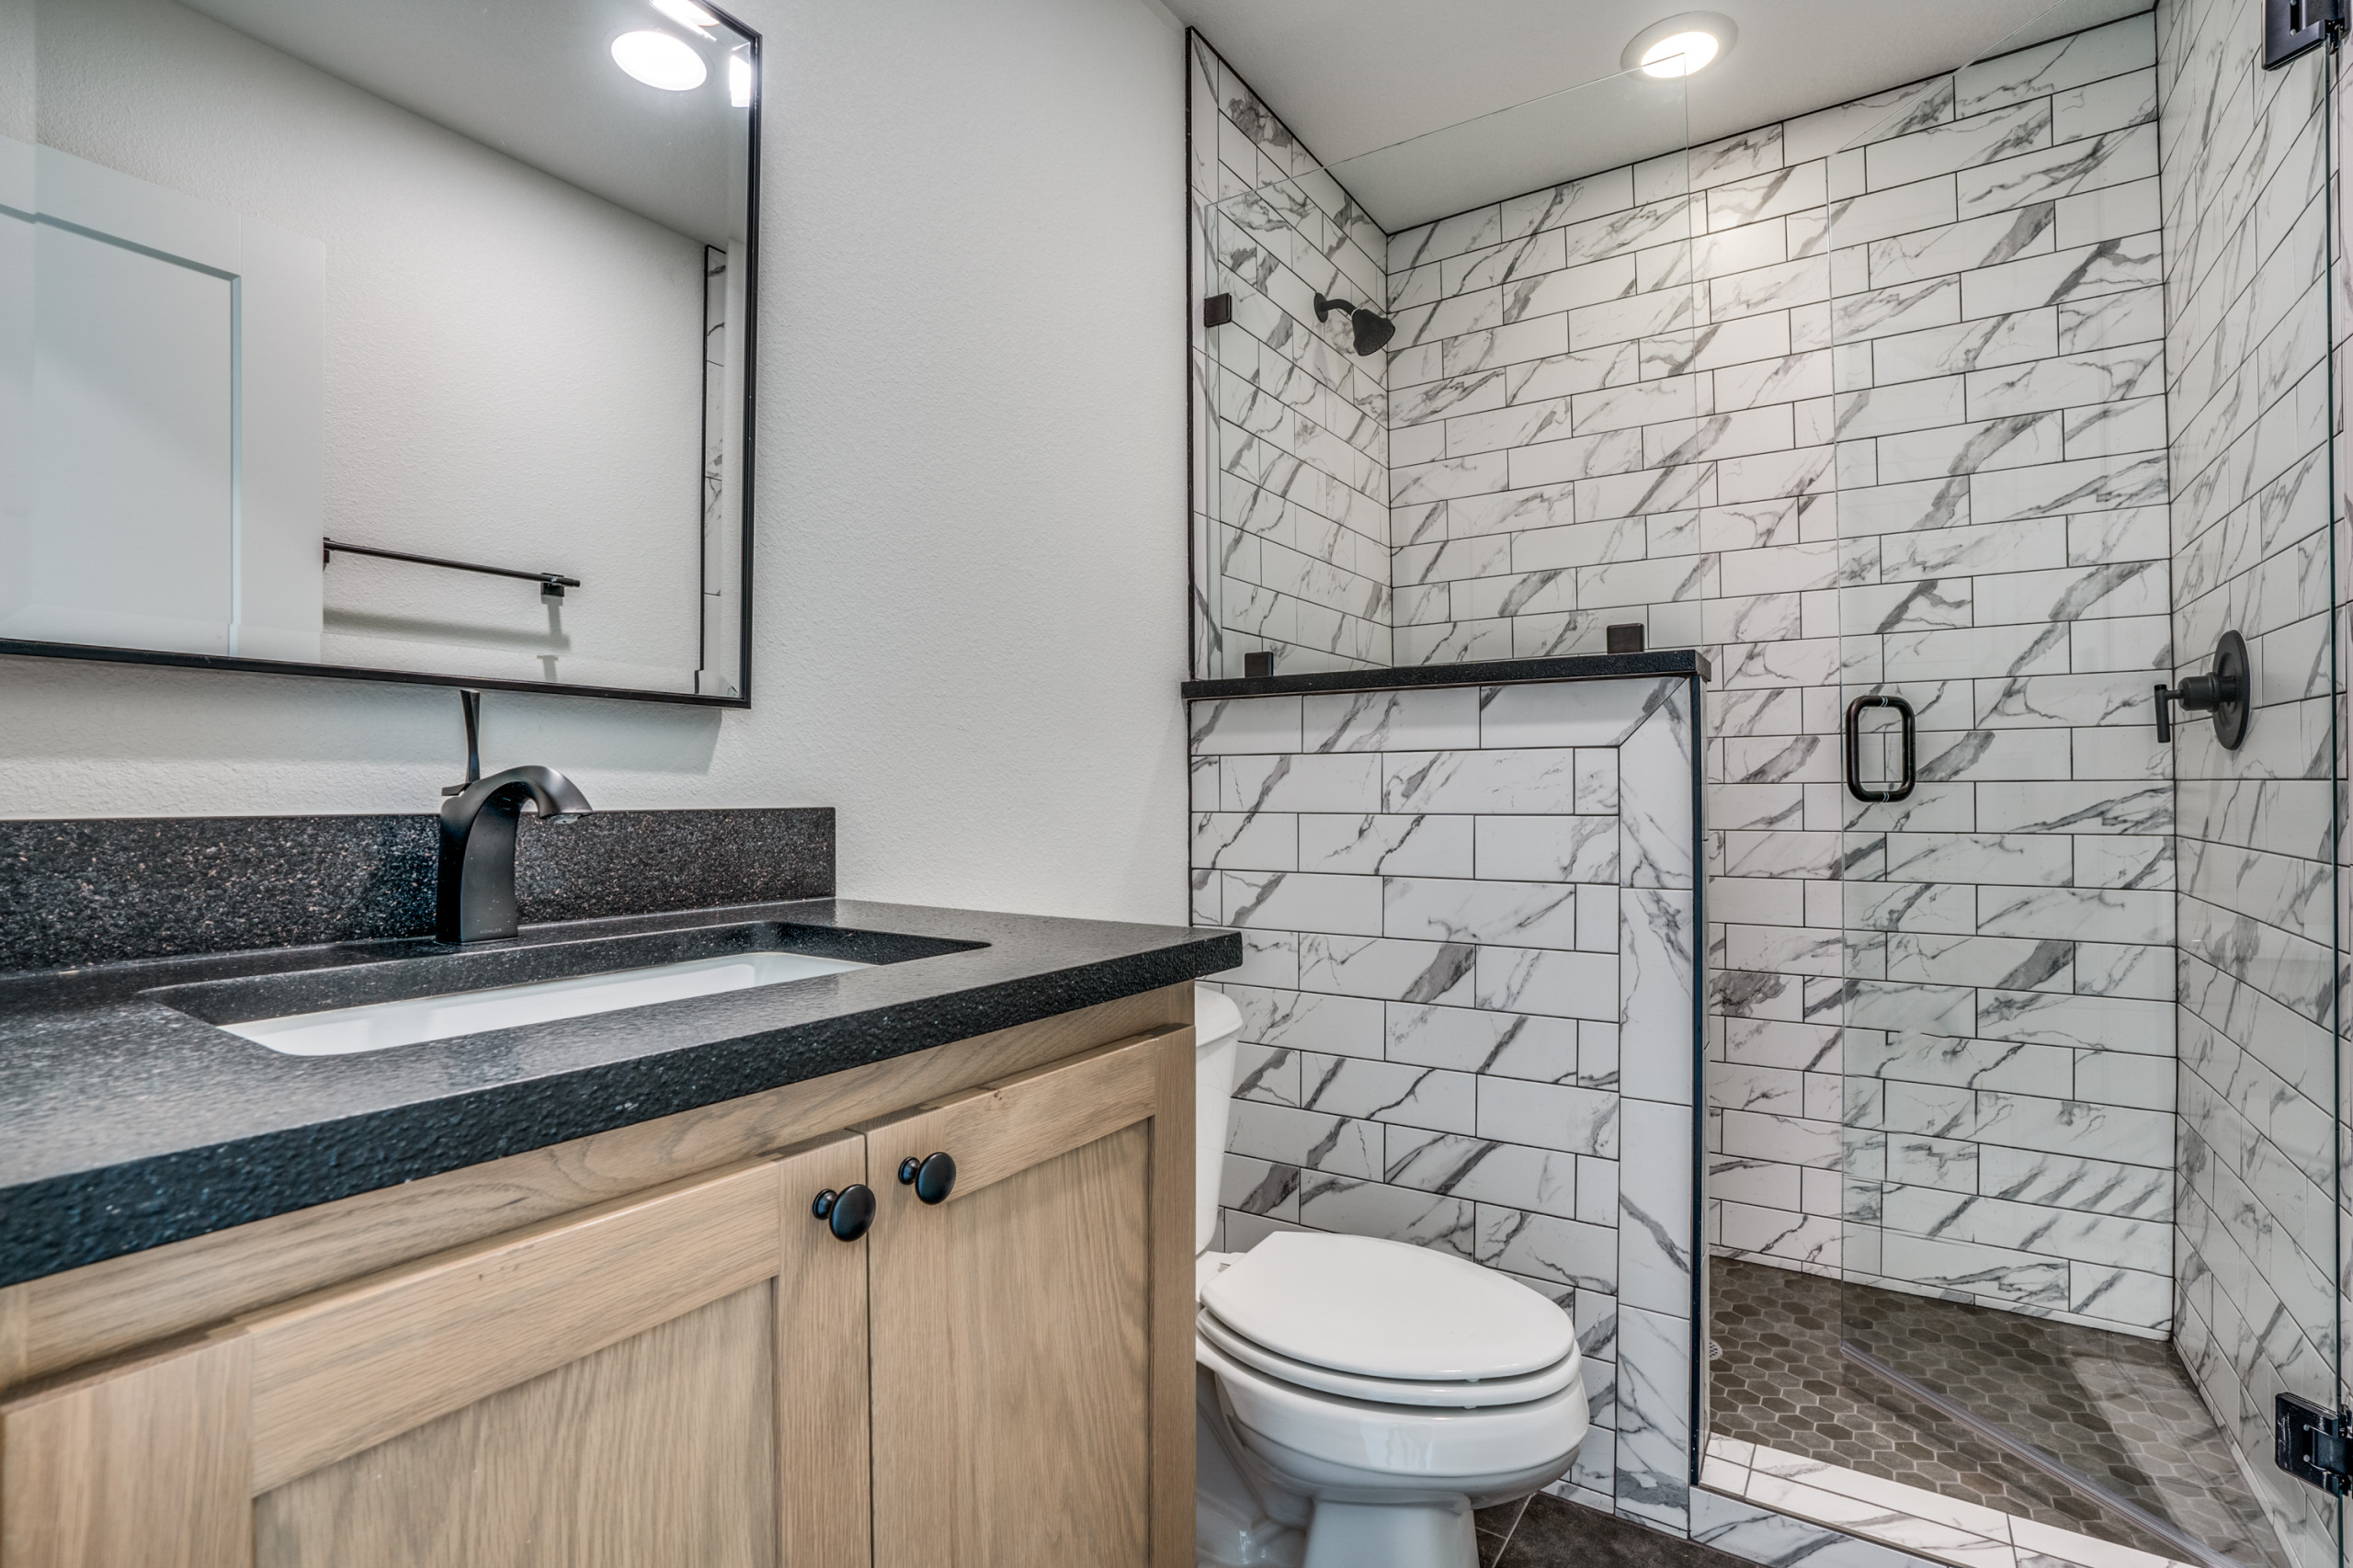 Bathroom Tile - Black & White w/ Wood Accents